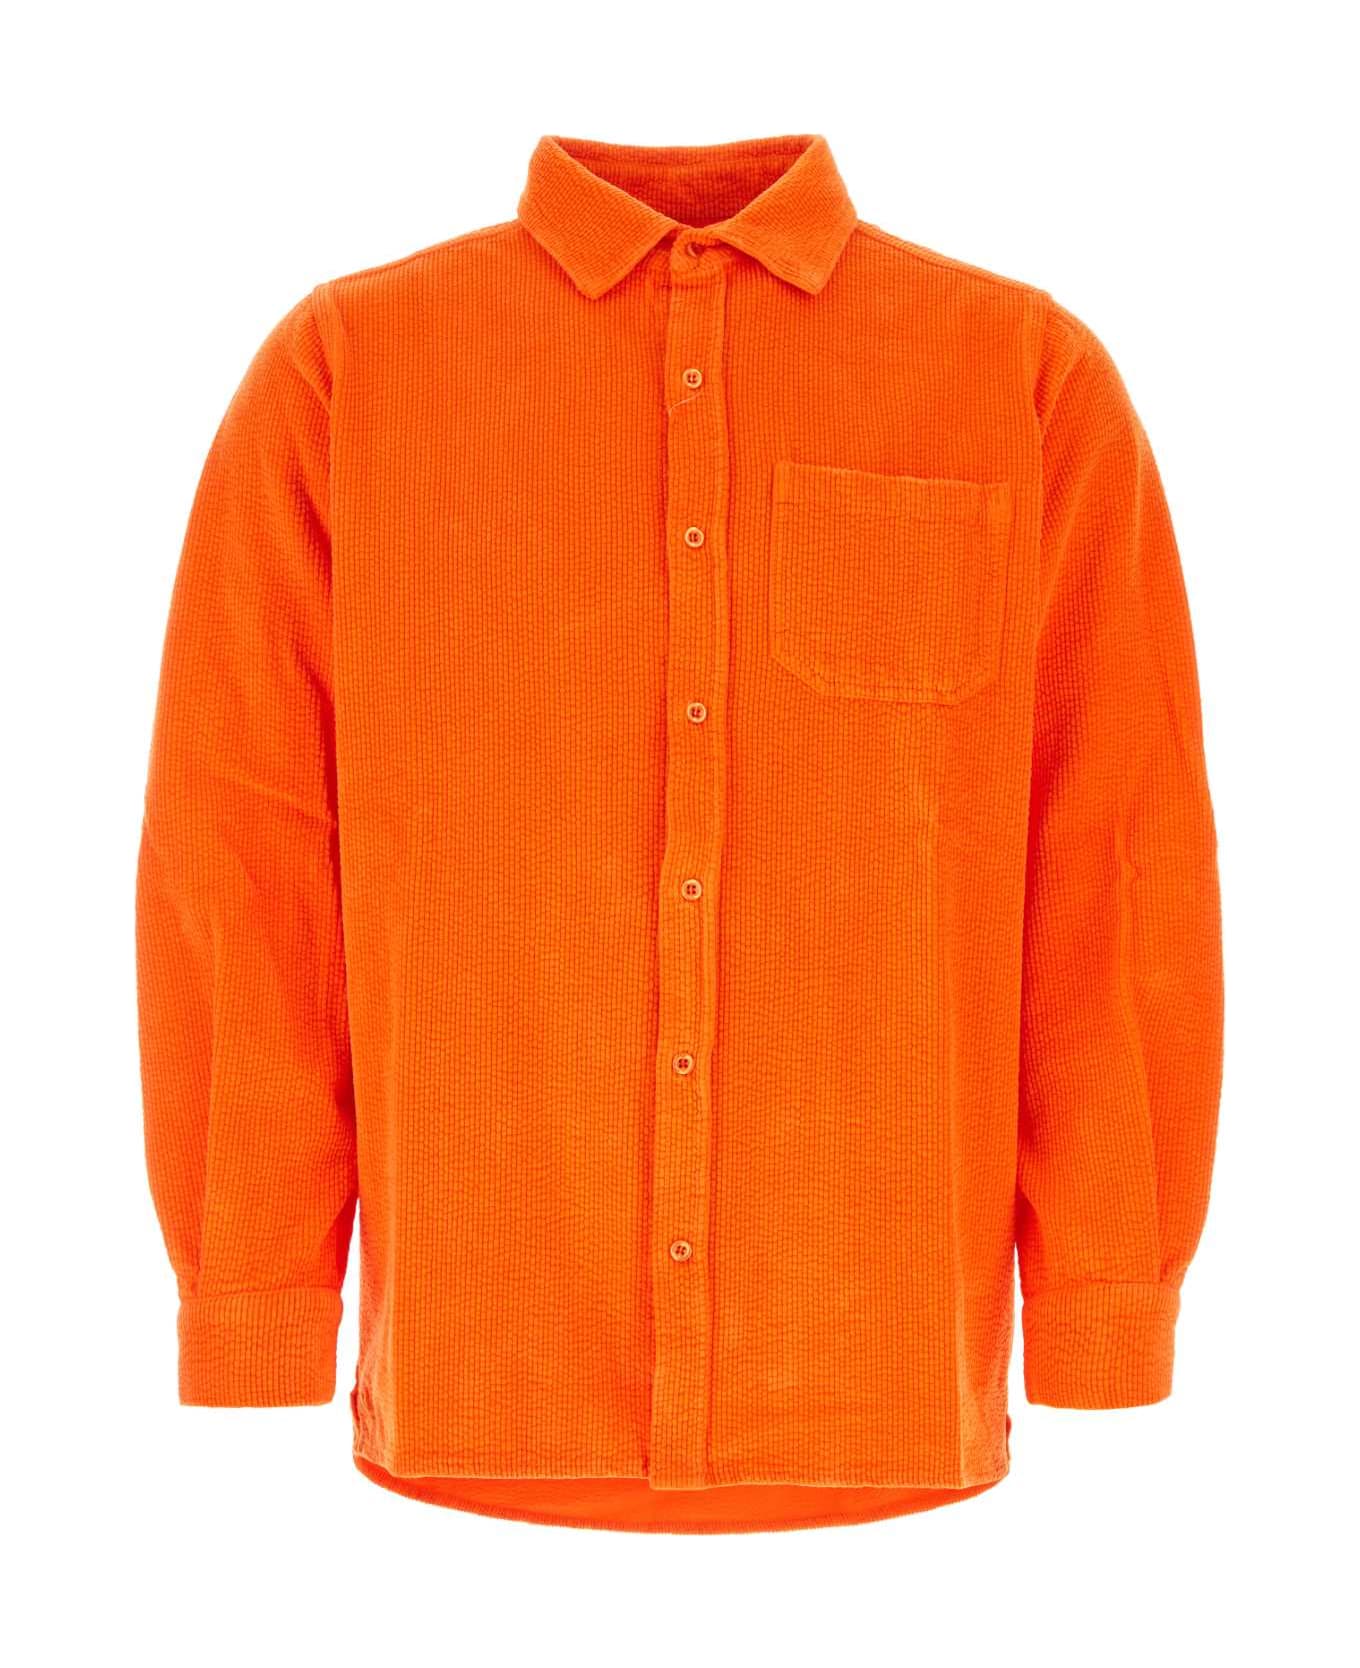 ERL Orange Corduroy Shirt - ORANGE シャツ